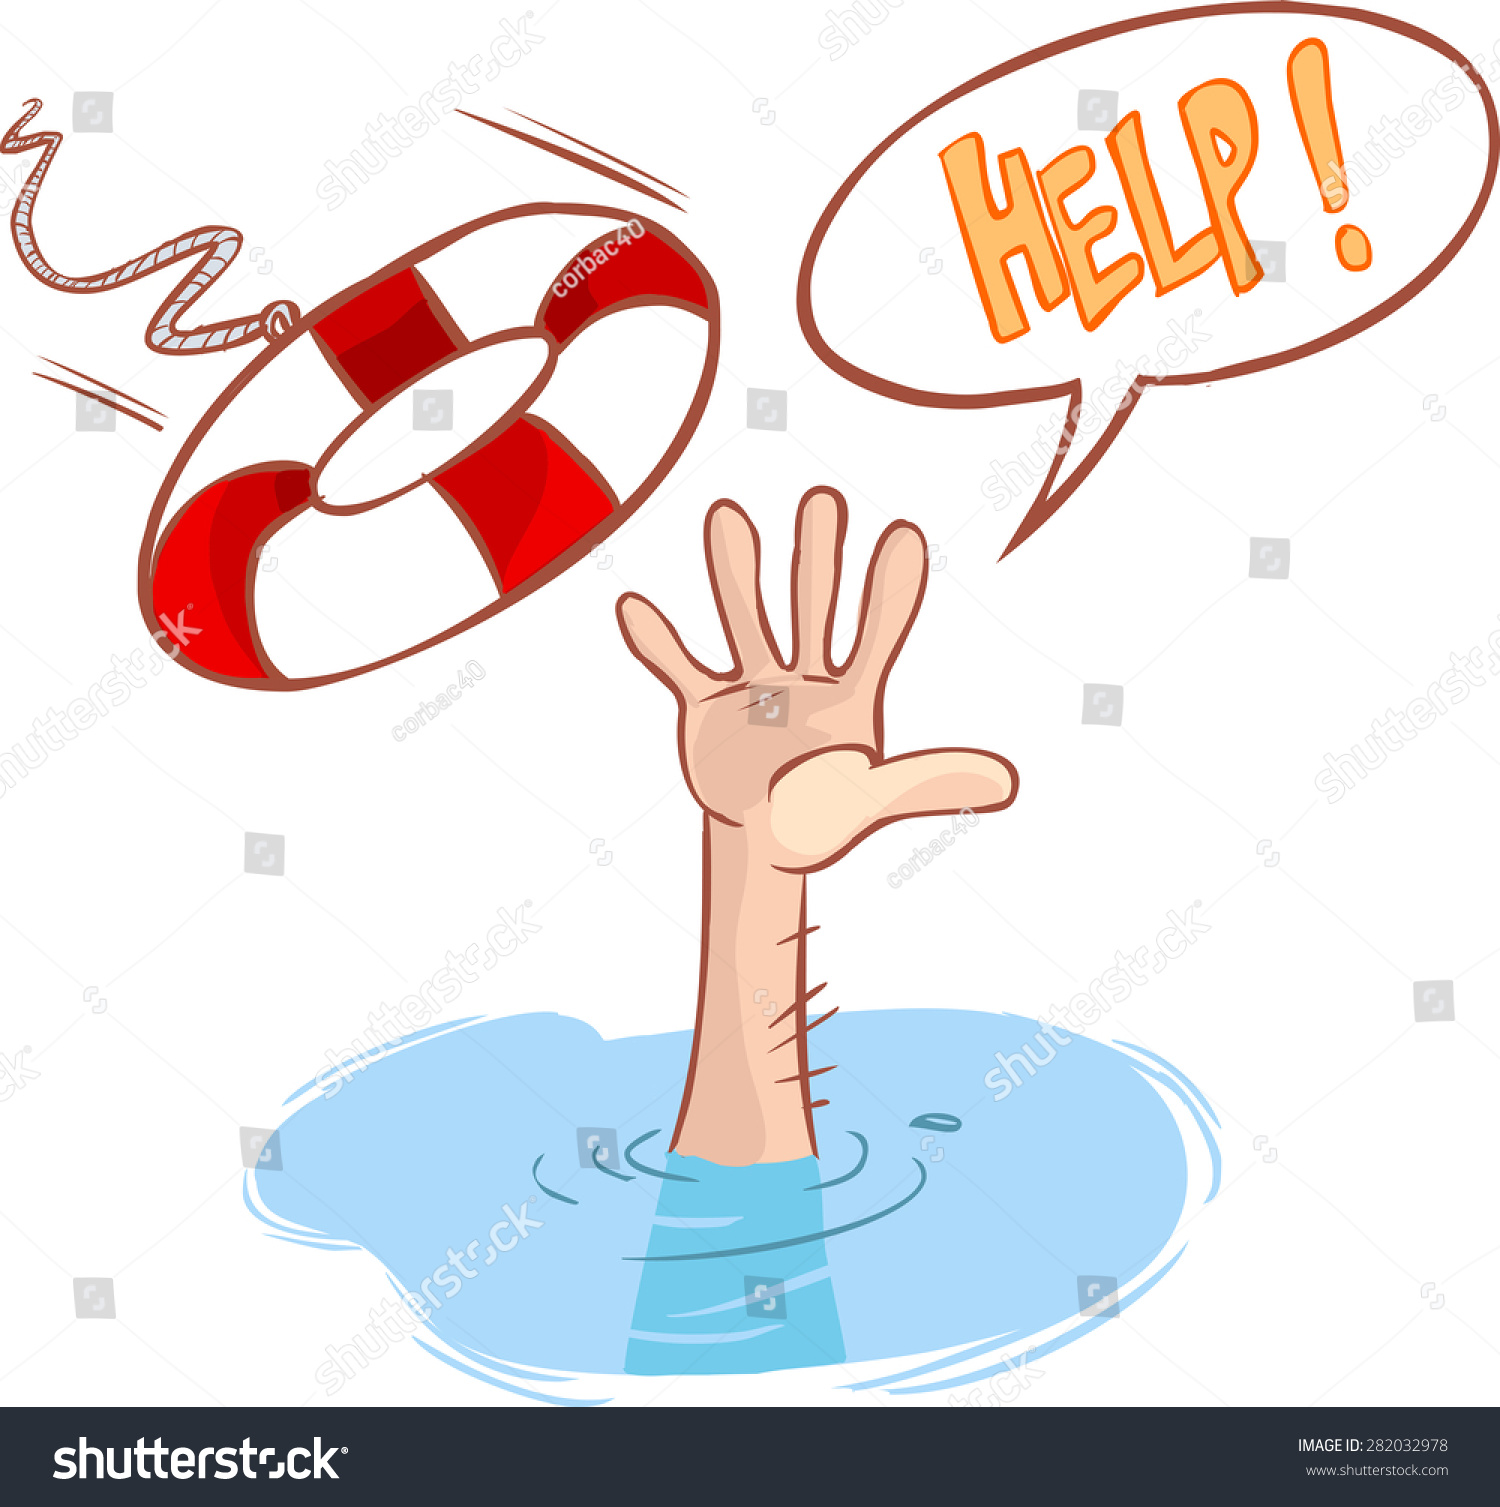 6,285 Drowning cartoon Images, Stock Photos & Vectors | Shutterstock